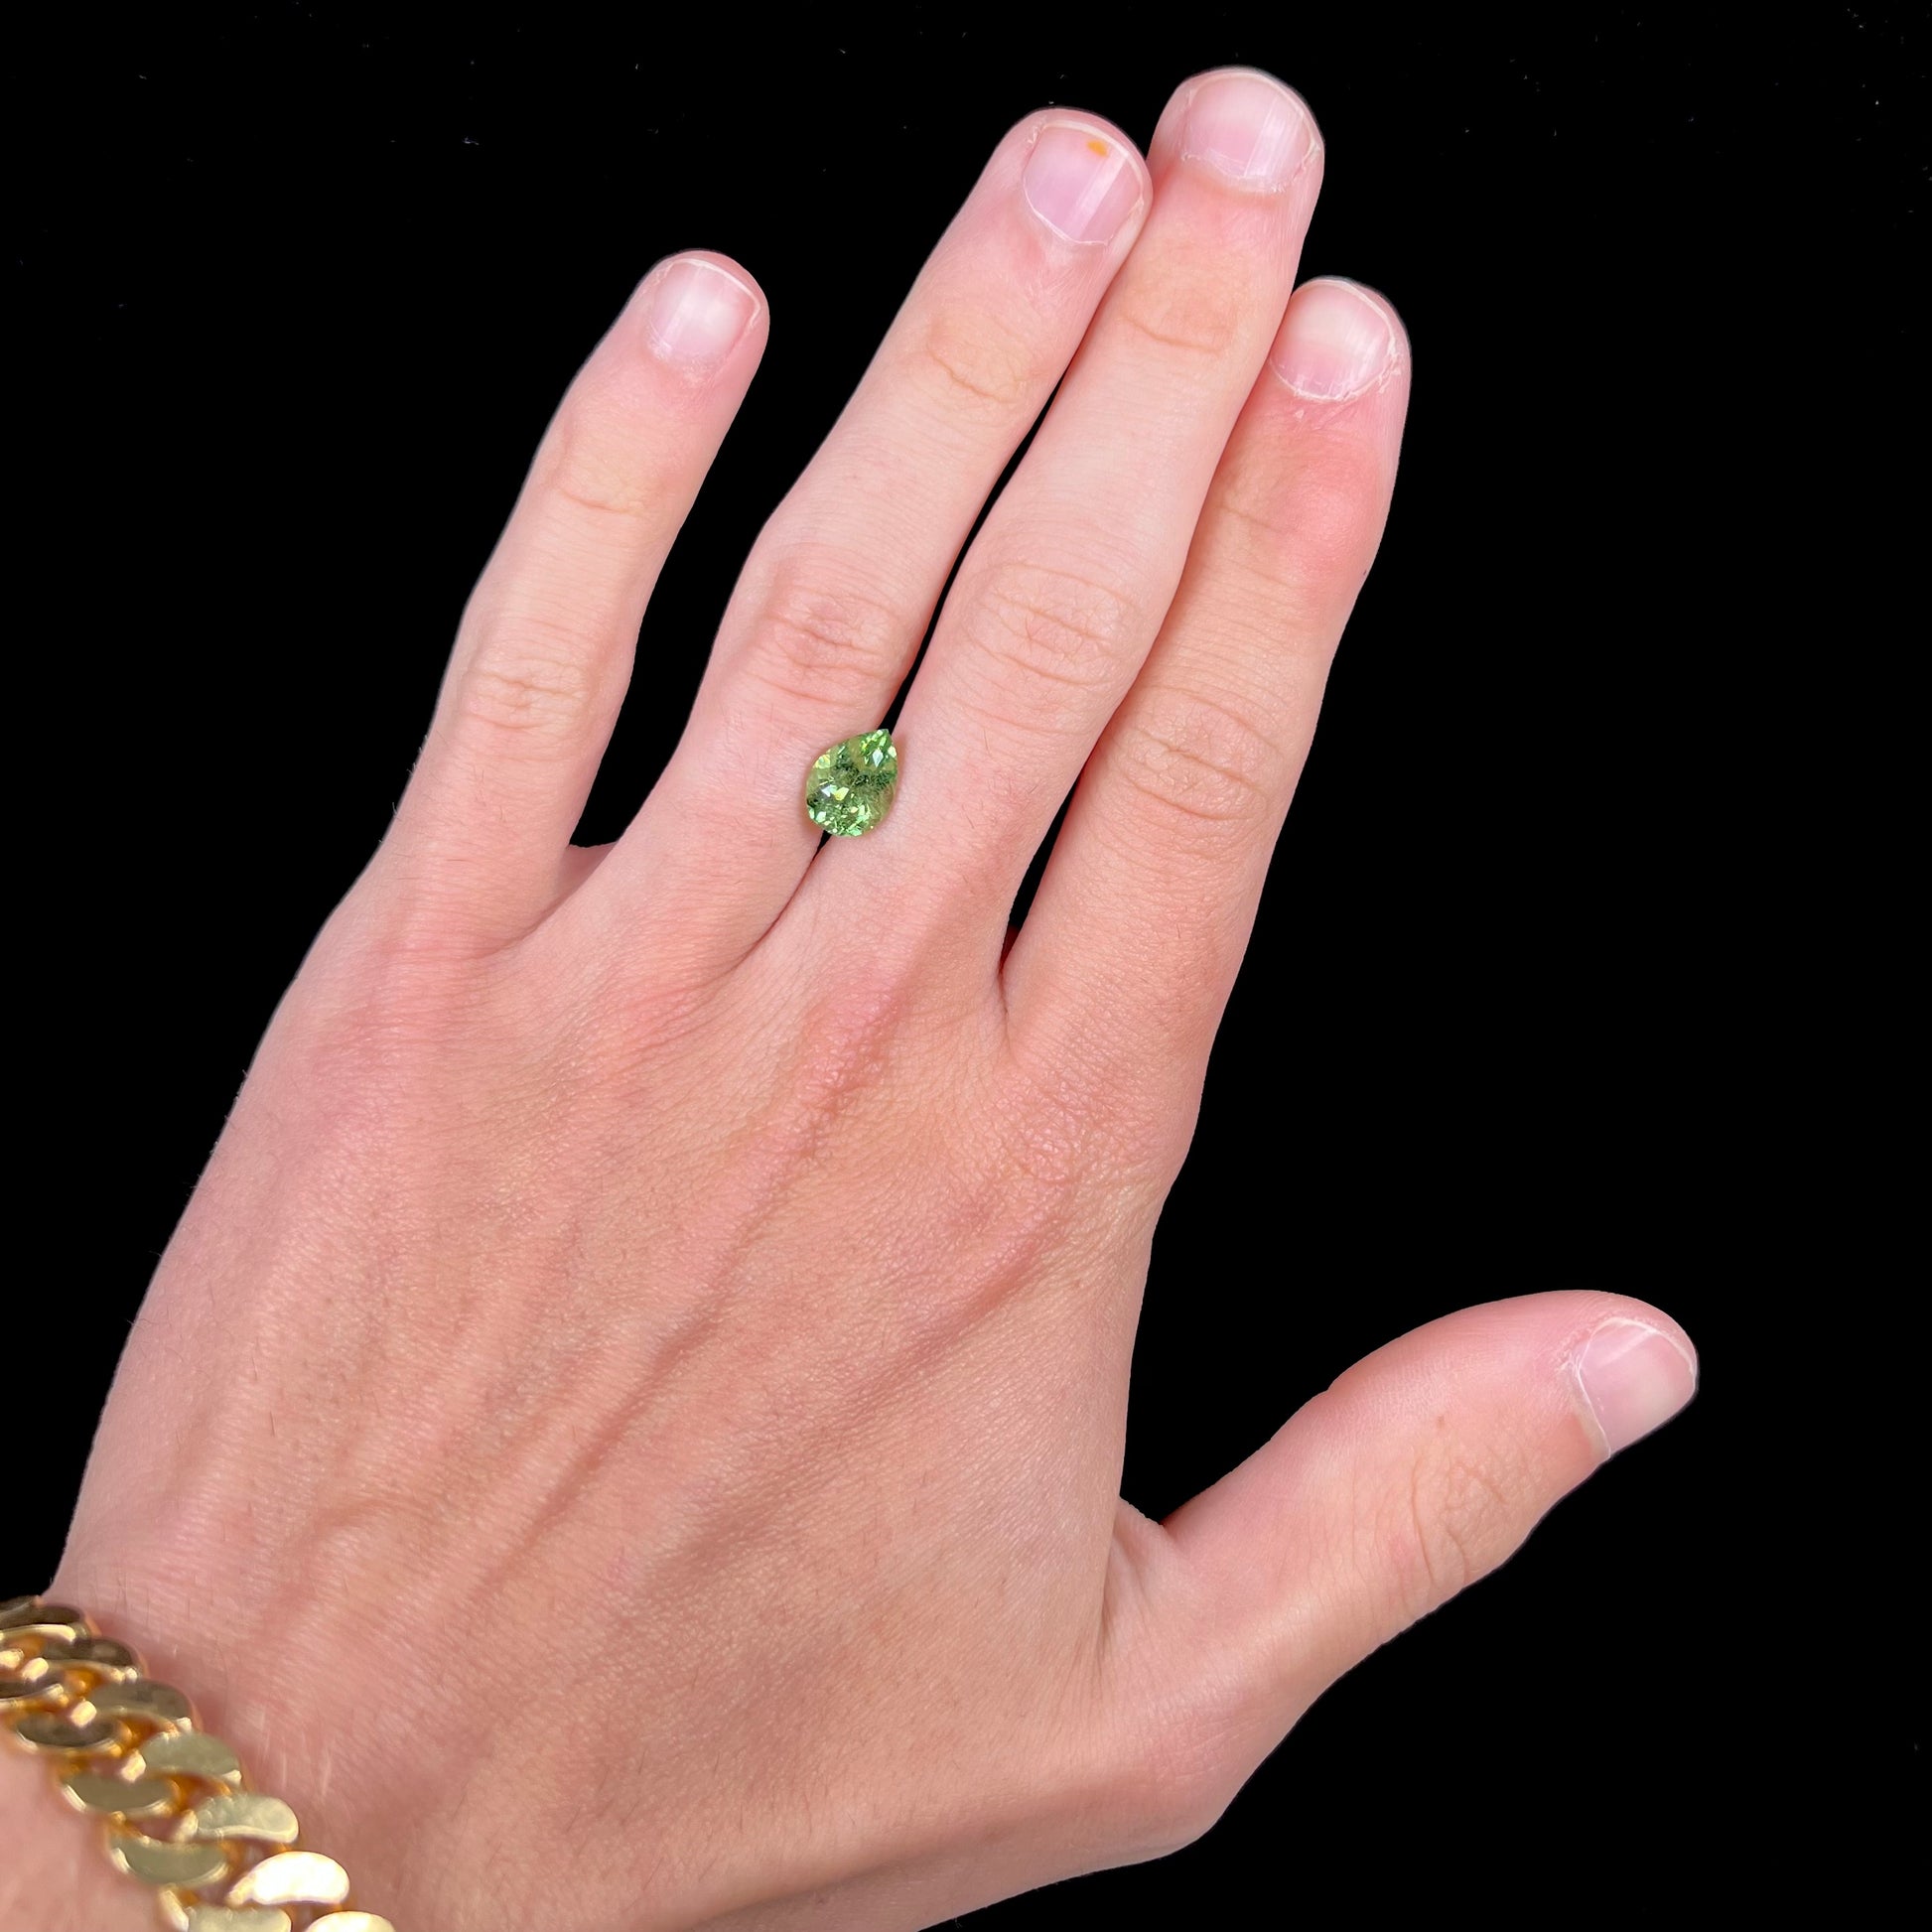 A loose, pear shaped tsavorite garnet gemstone.  The stone is yellowish green.